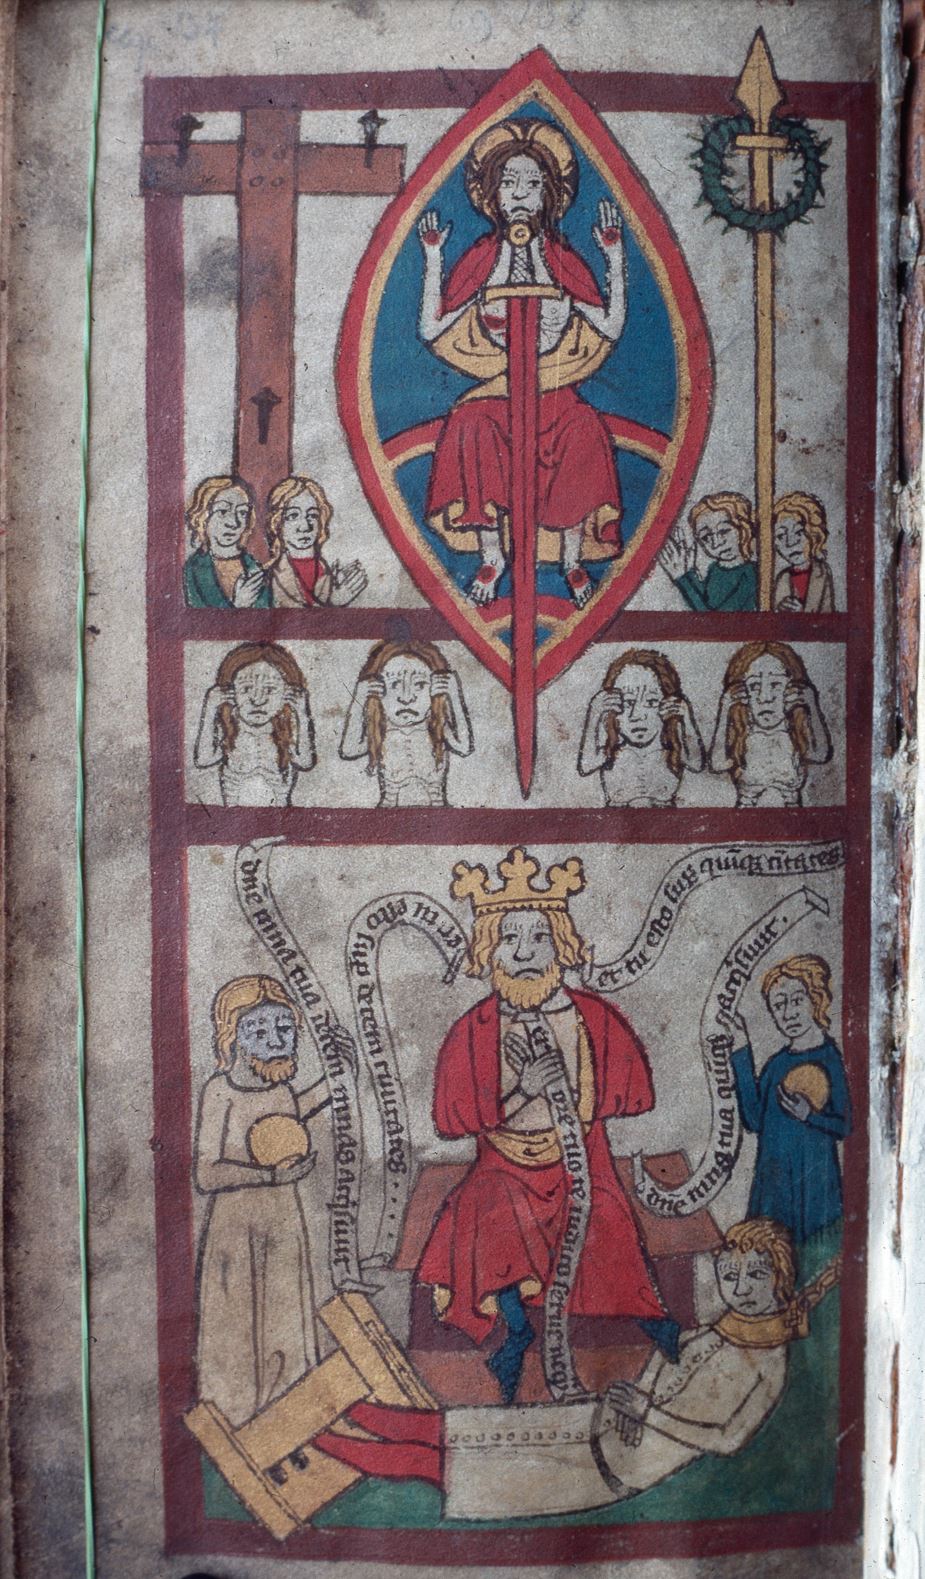 Speculum humanae salvationis 1350-1400 Cologne, Historisches Archiv, Best. 7020 W 105 p 138